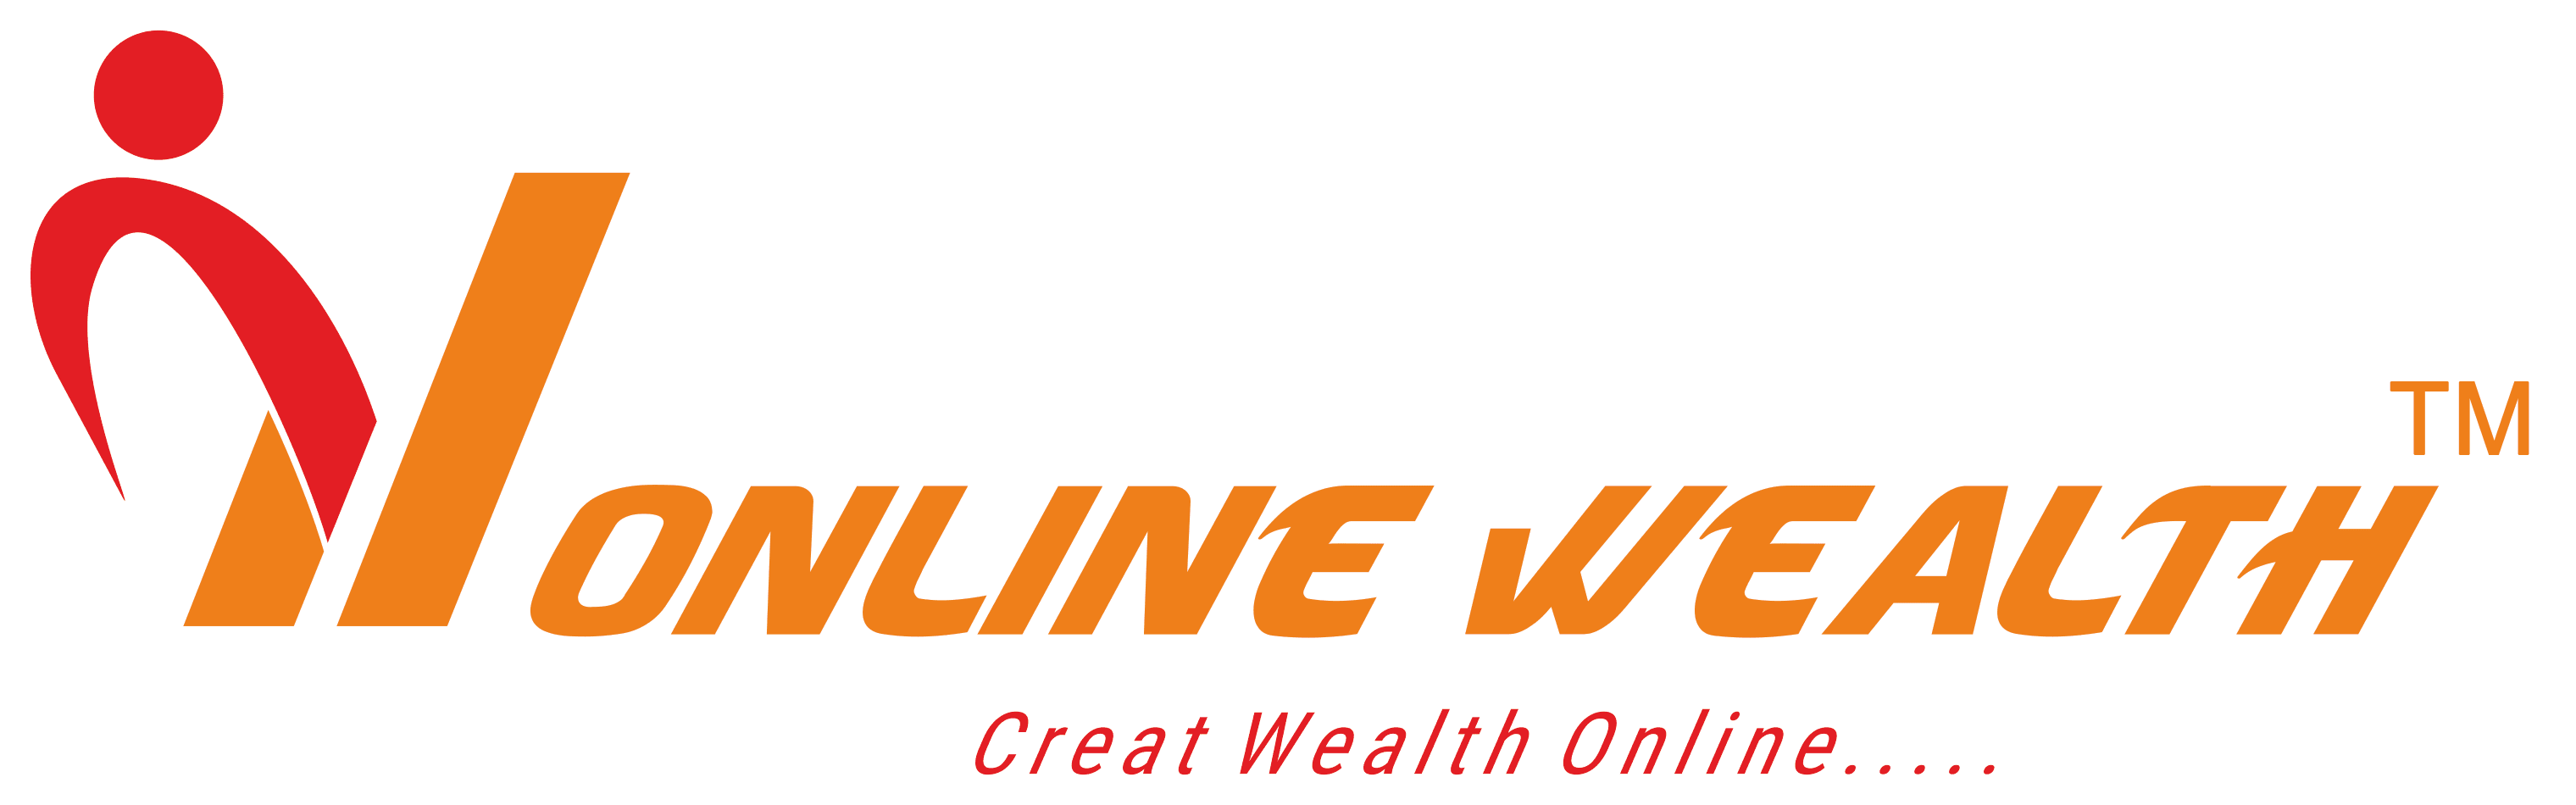 online wealth